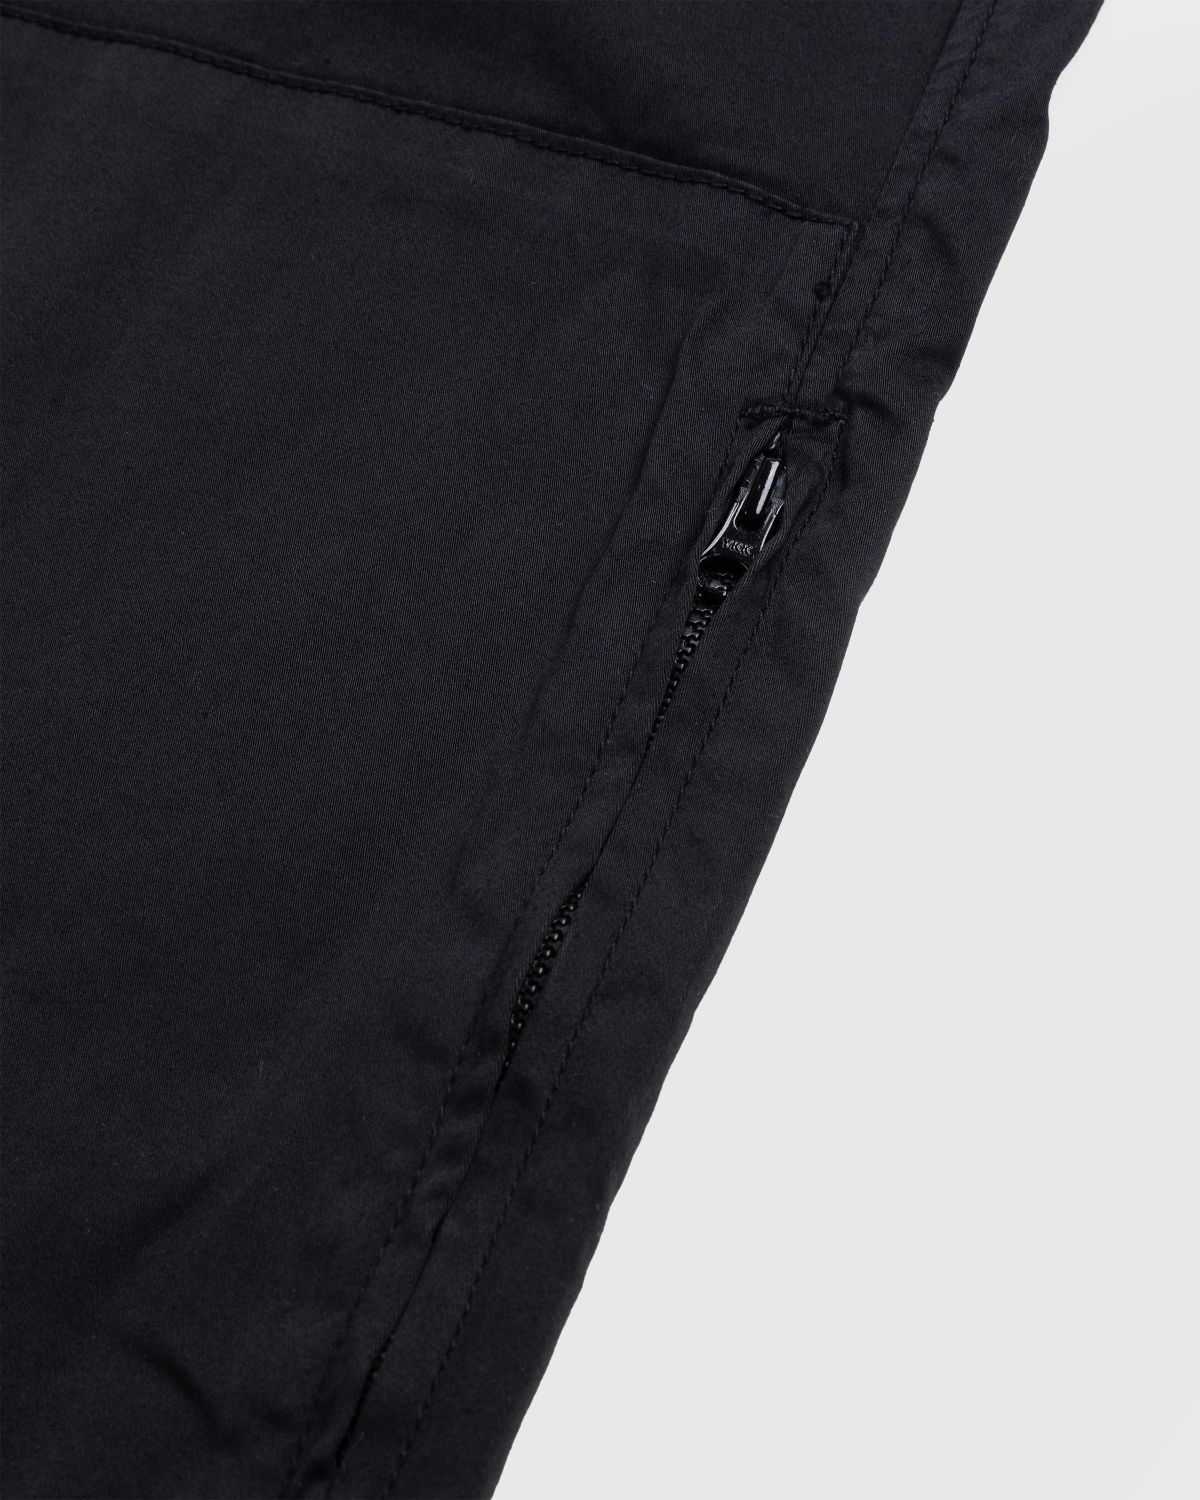 C.P. Company – Stretch Sateen Loose Fit Pants Black - Pants - Black - Image 5